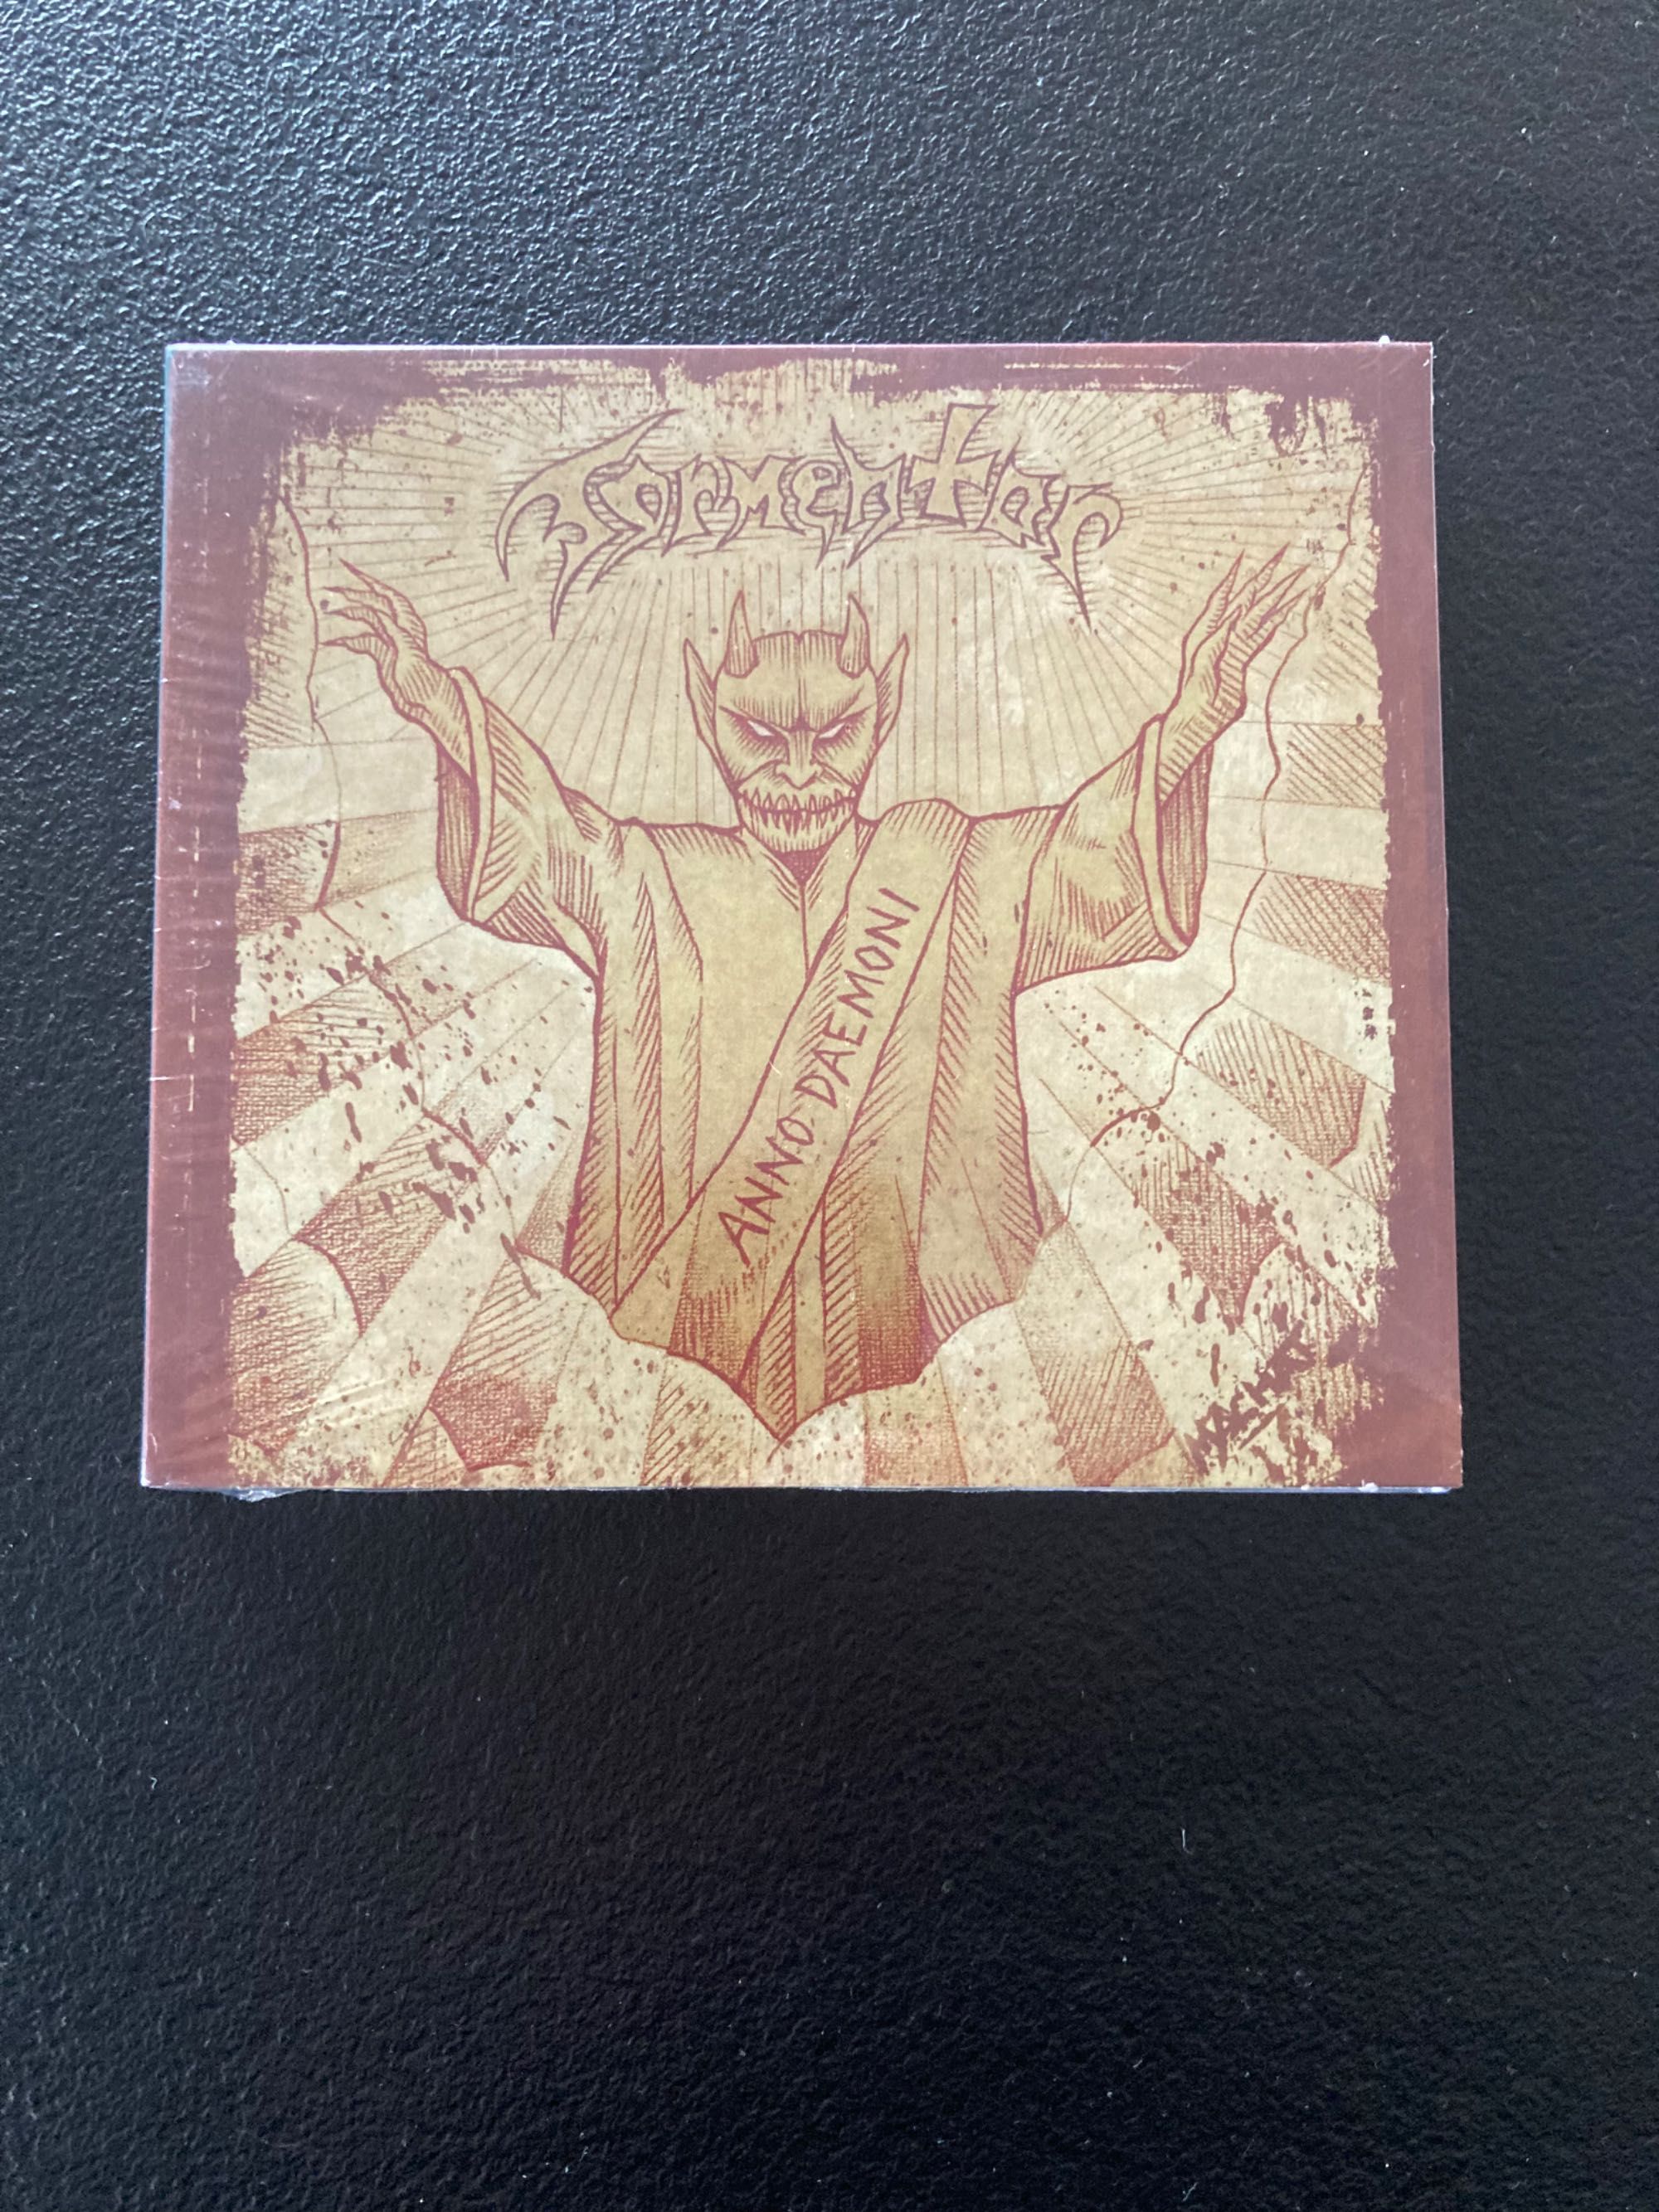 Tormentor Anno Daemoni płyta cd/dvd koncert Attila Csihar Mayhem nowa